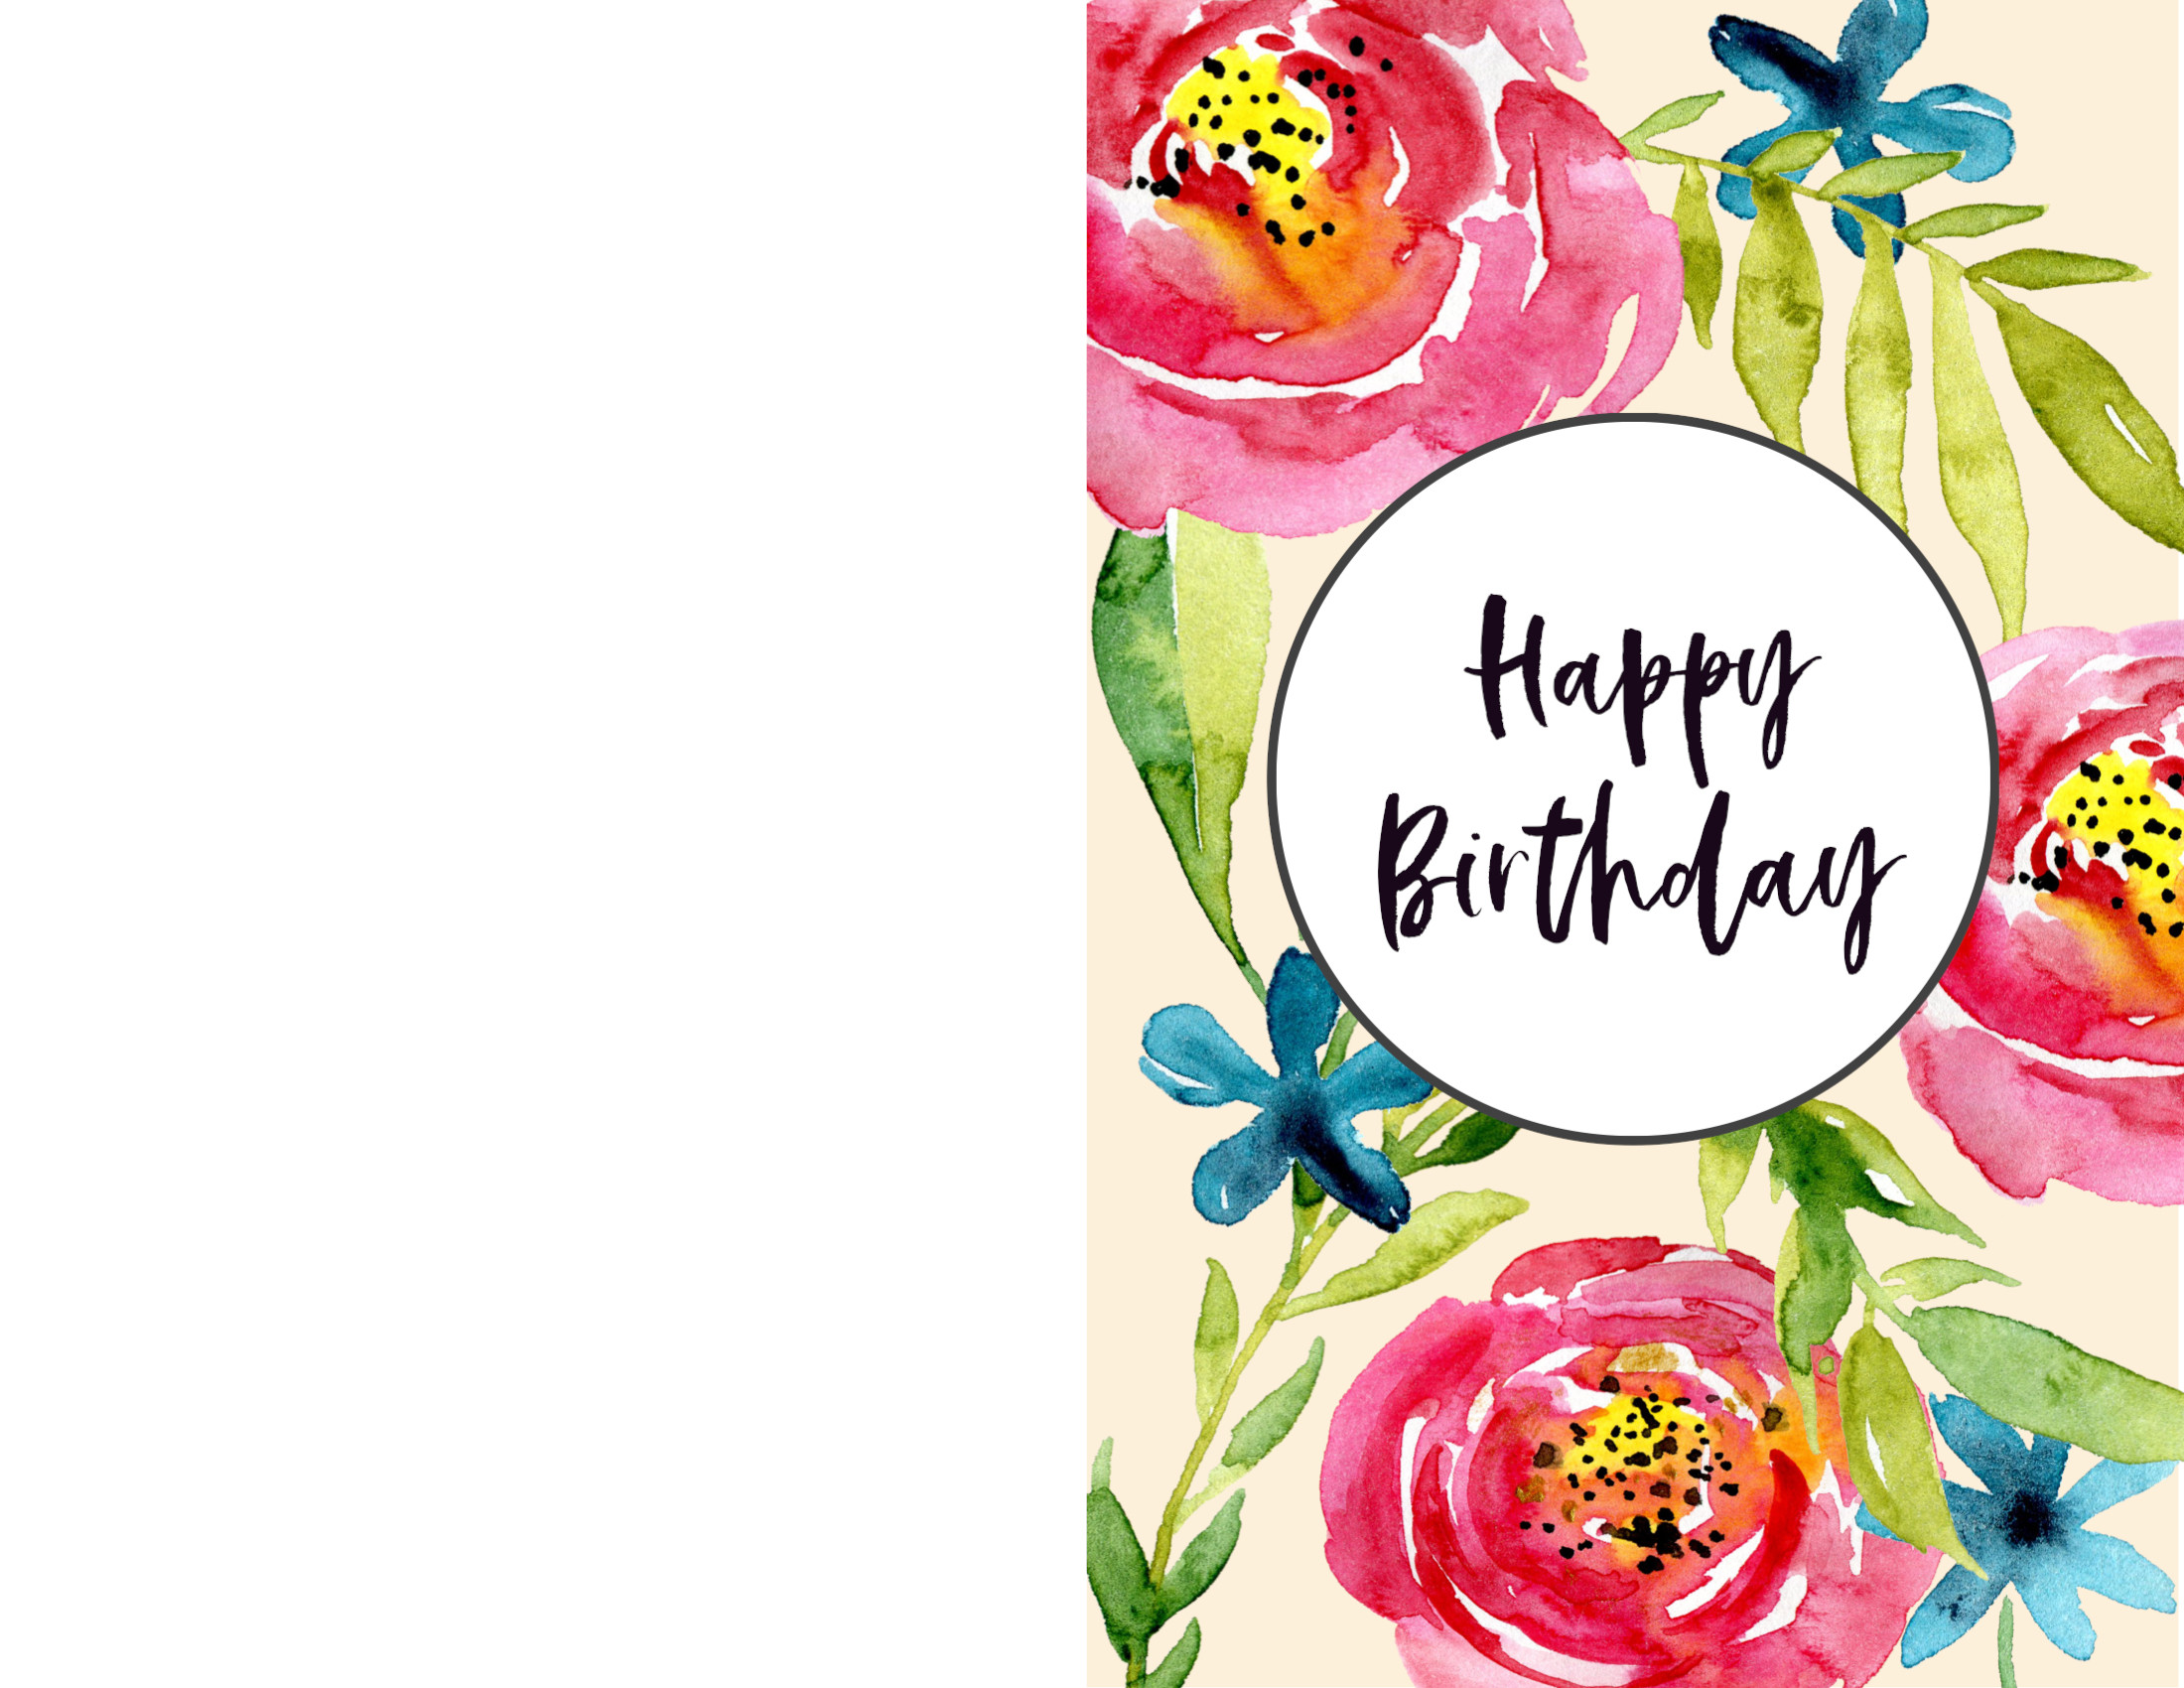 Print Birthday Card Free
 Free Printable Birthday Cards Paper Trail Design